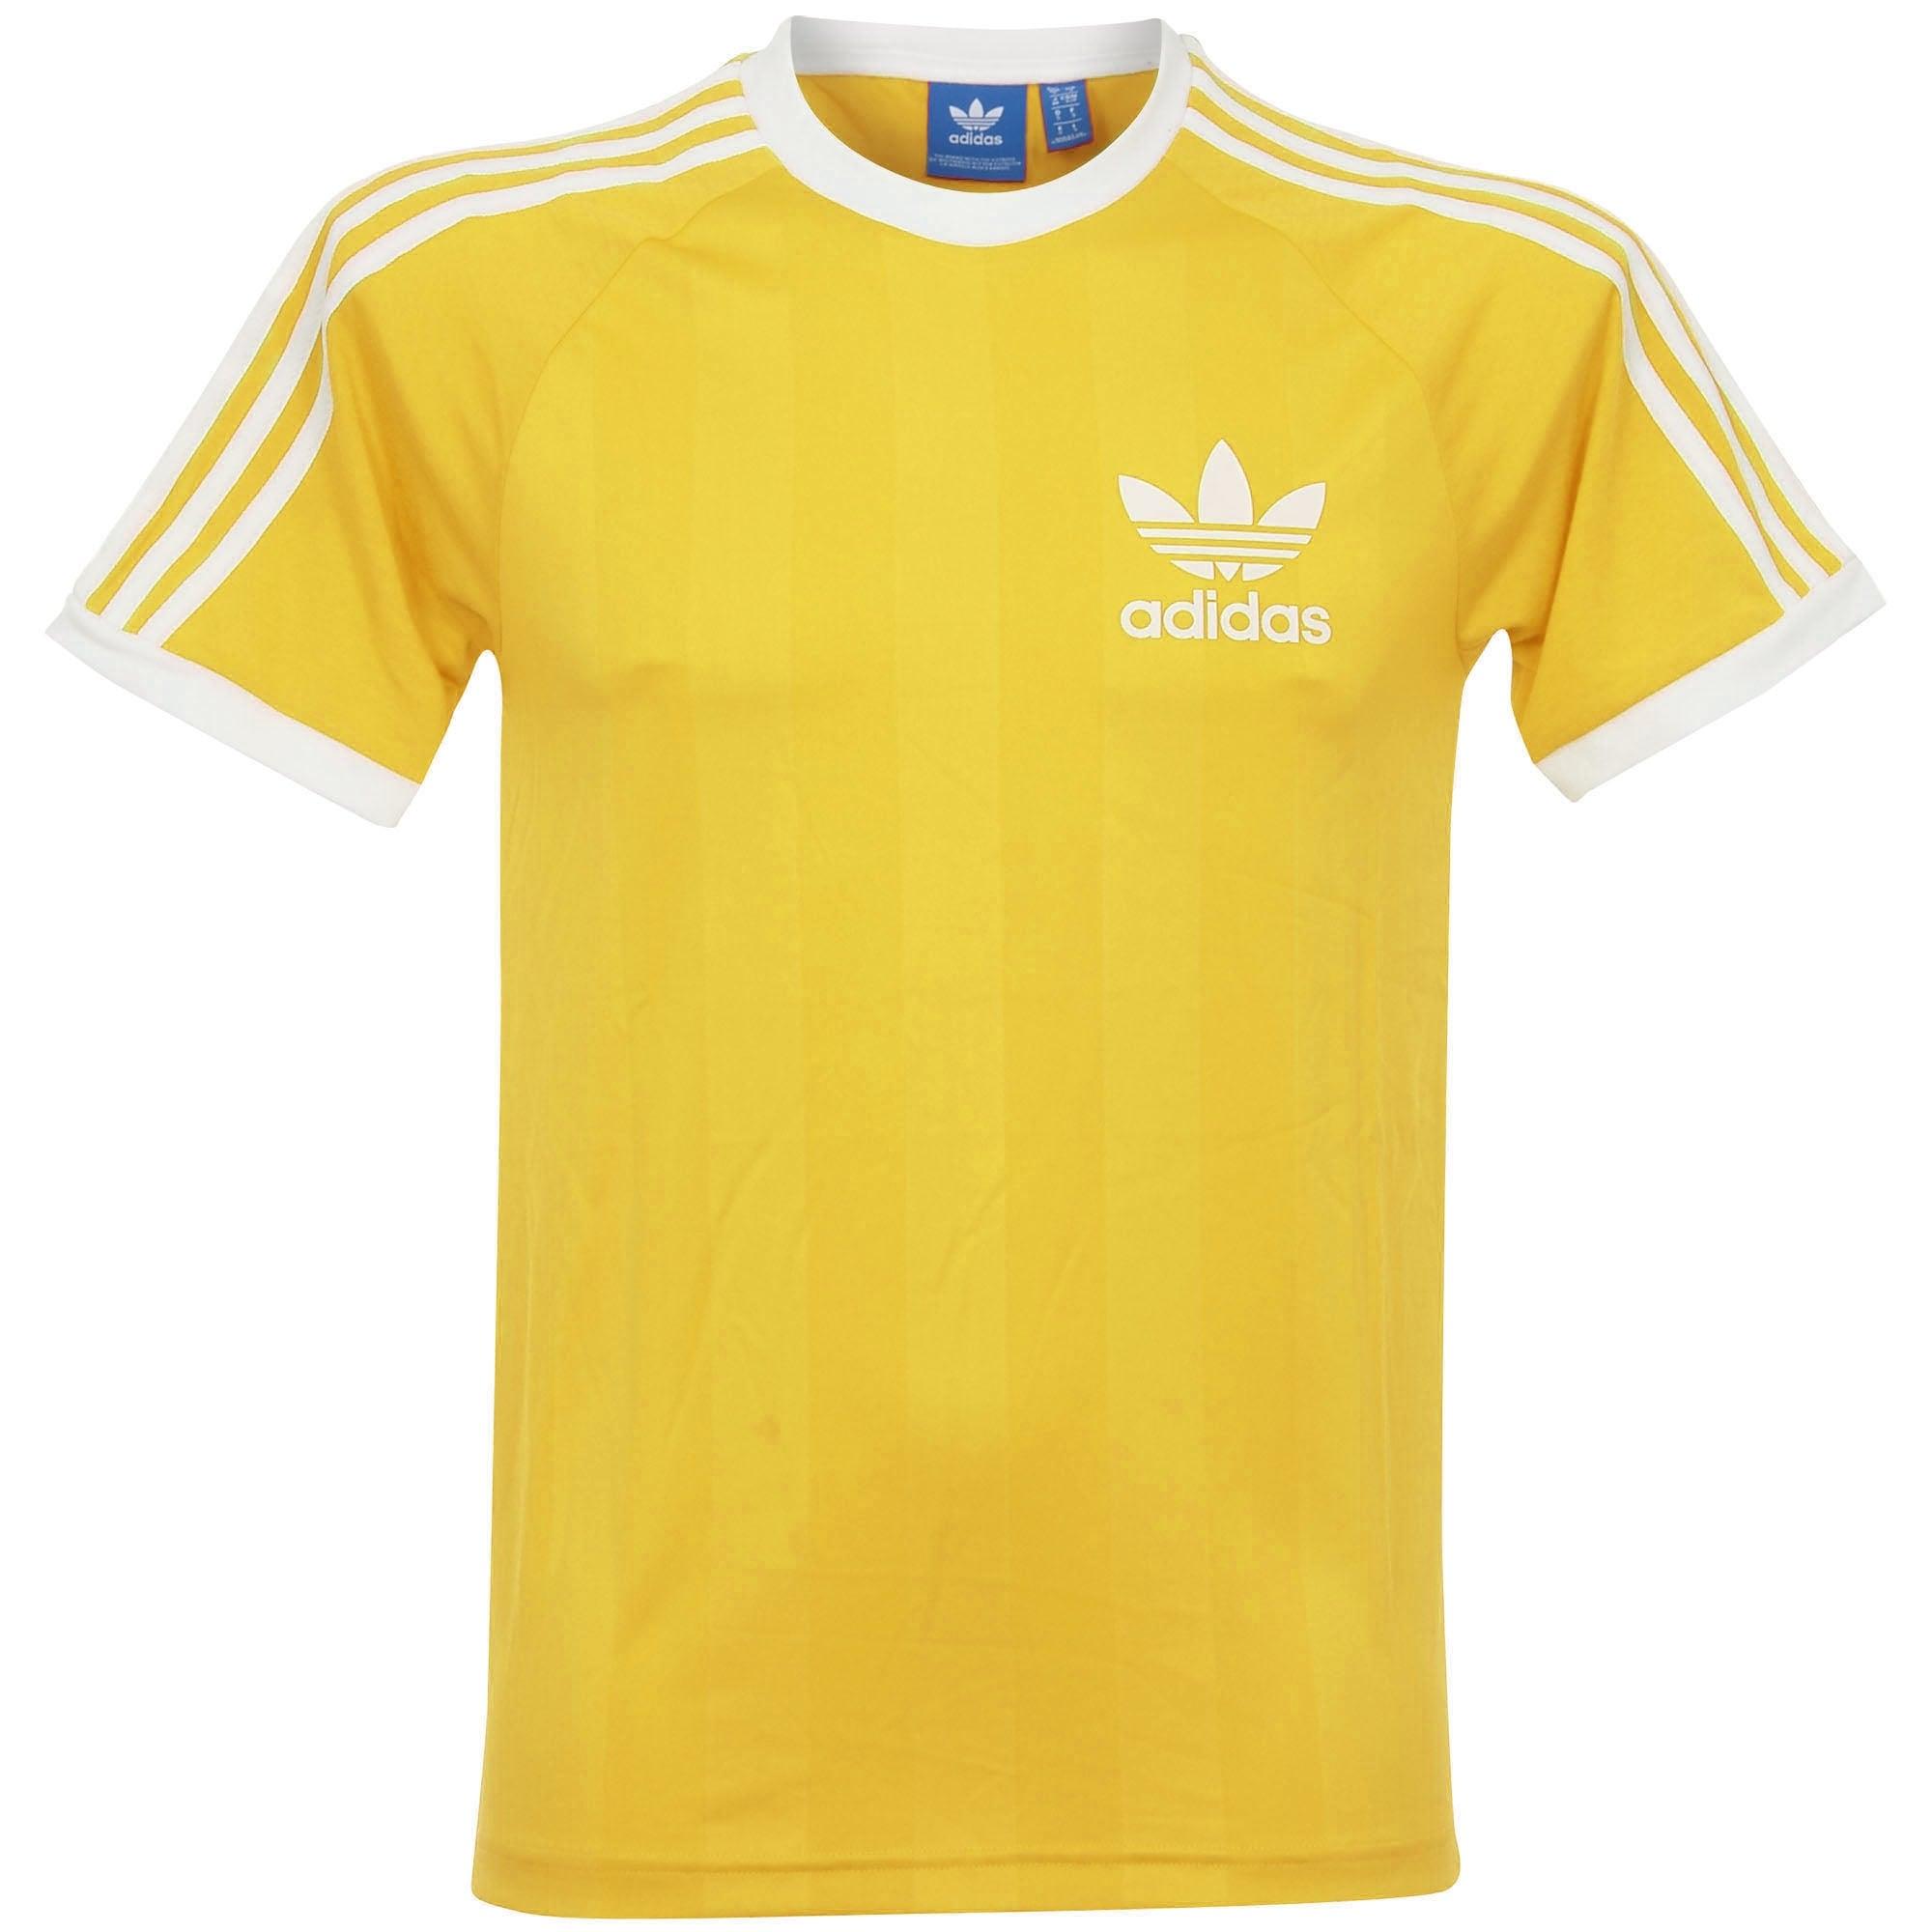 adidas t shirt yellow | Benvenuto per 